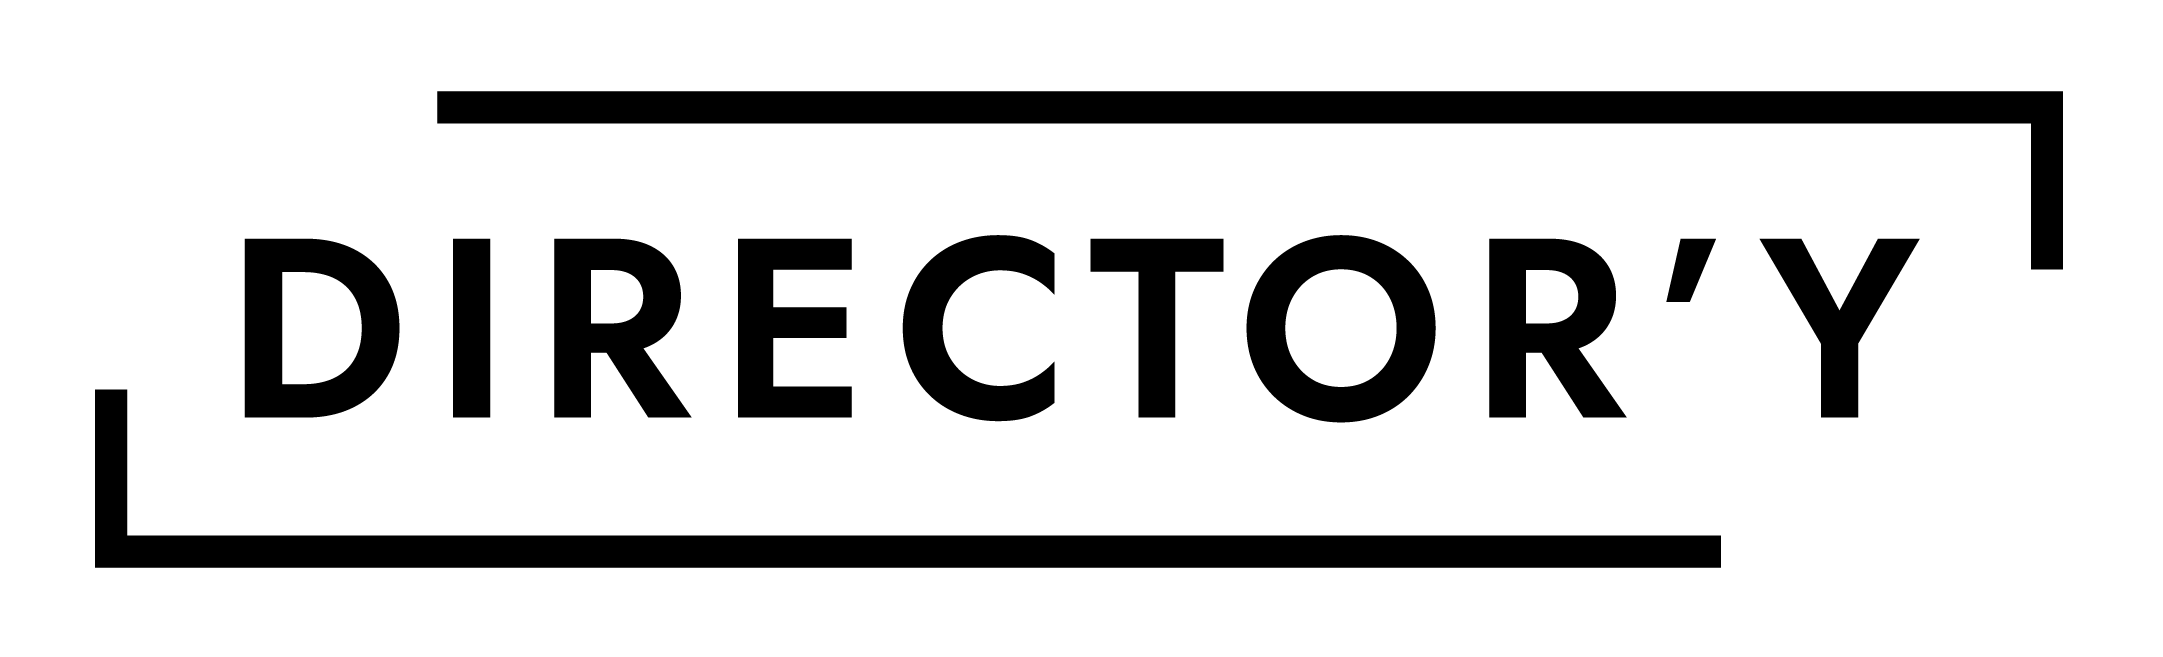 directory_logo